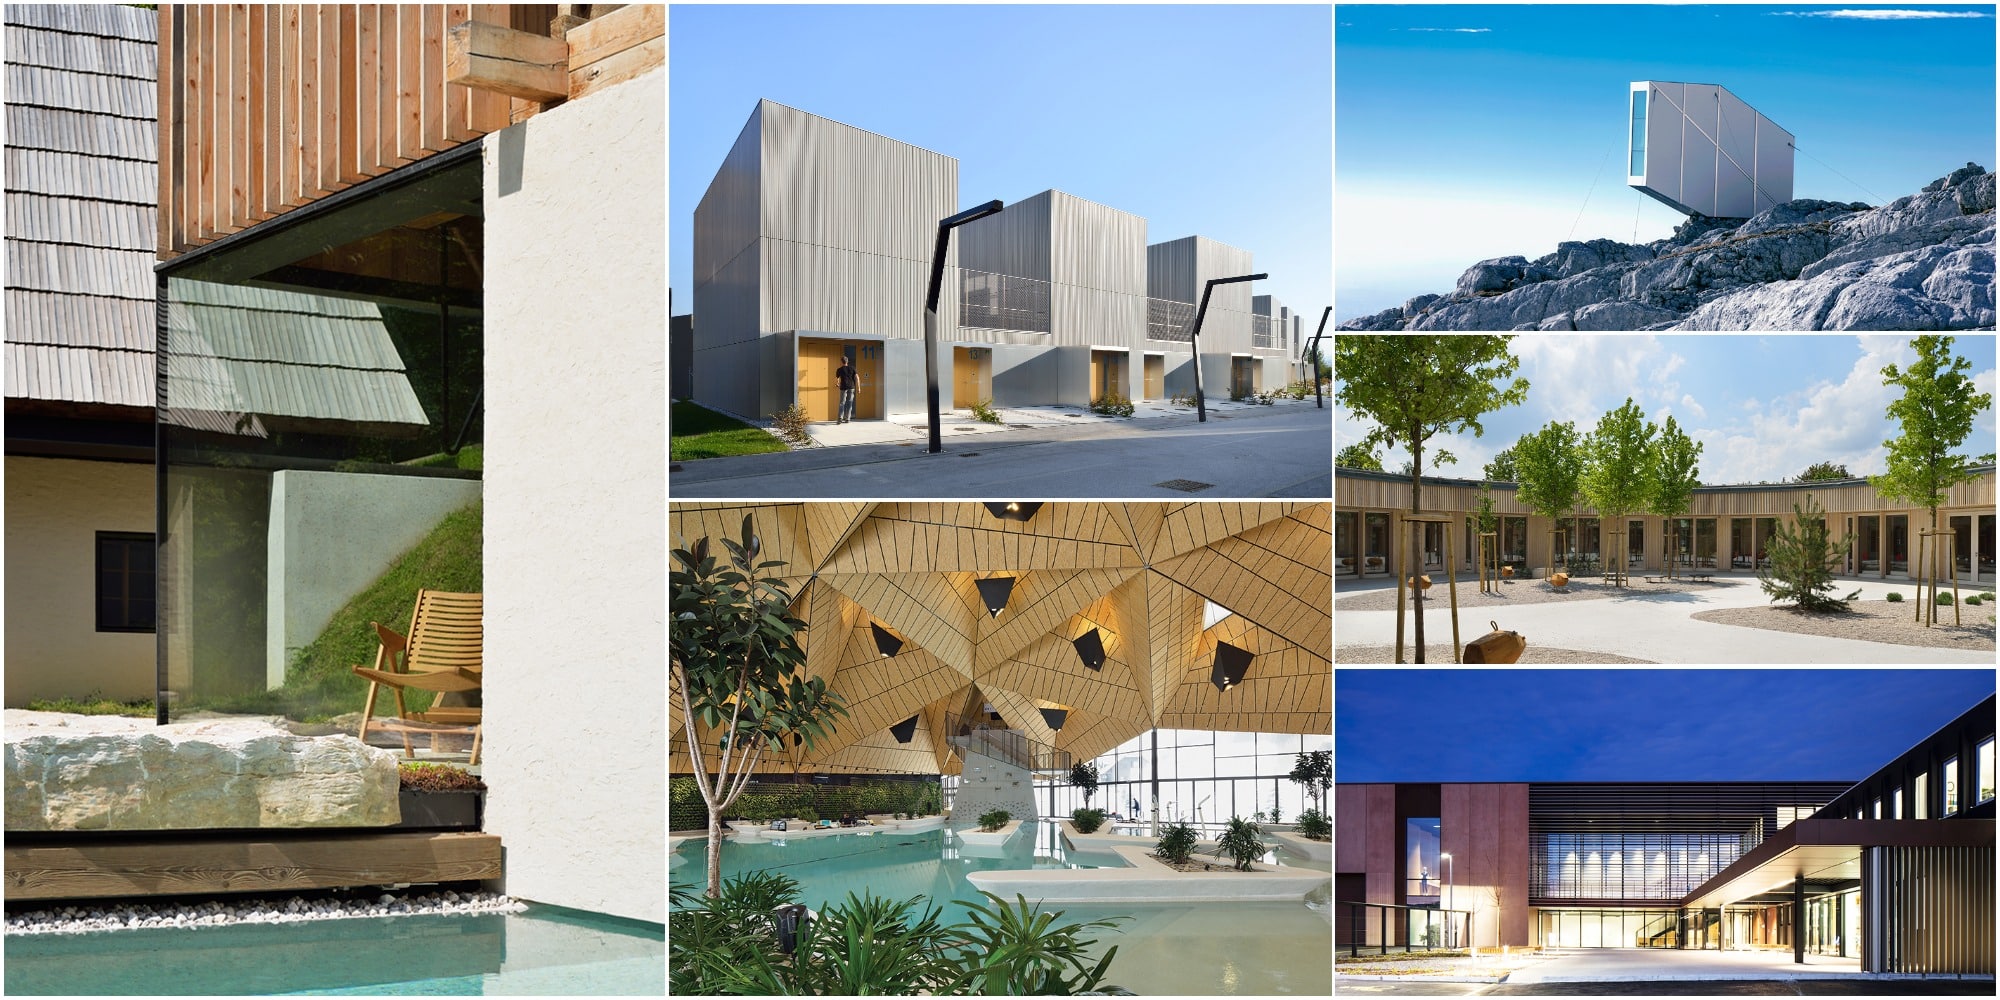 Znani so slovenski nominiranci za prestižno arhitekturno nagrado Mies van der Rohe